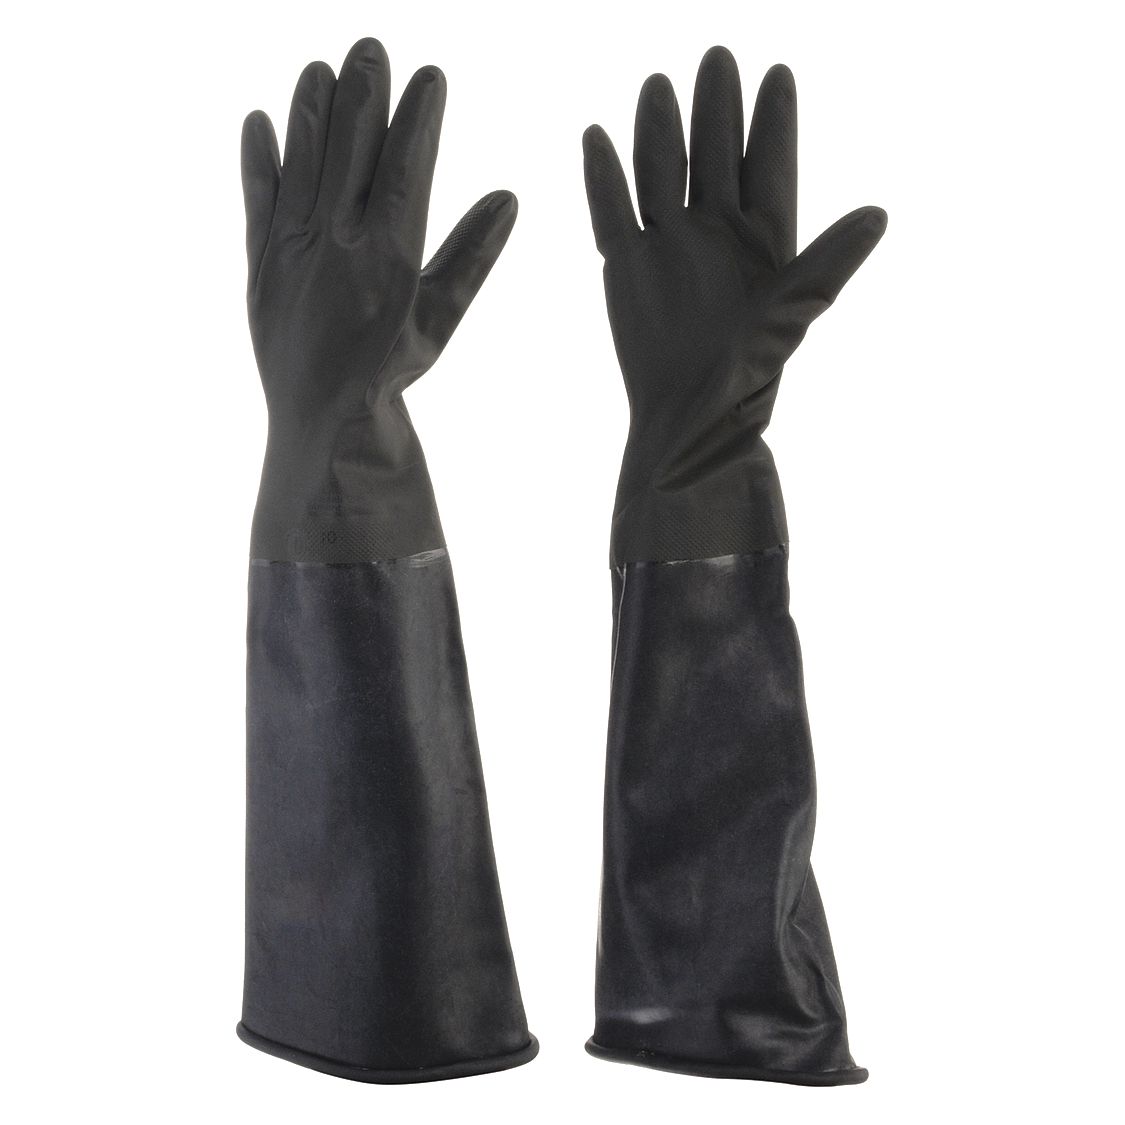 Safety Gloves - Protective Work Gloves - Grainger Industrial Supply